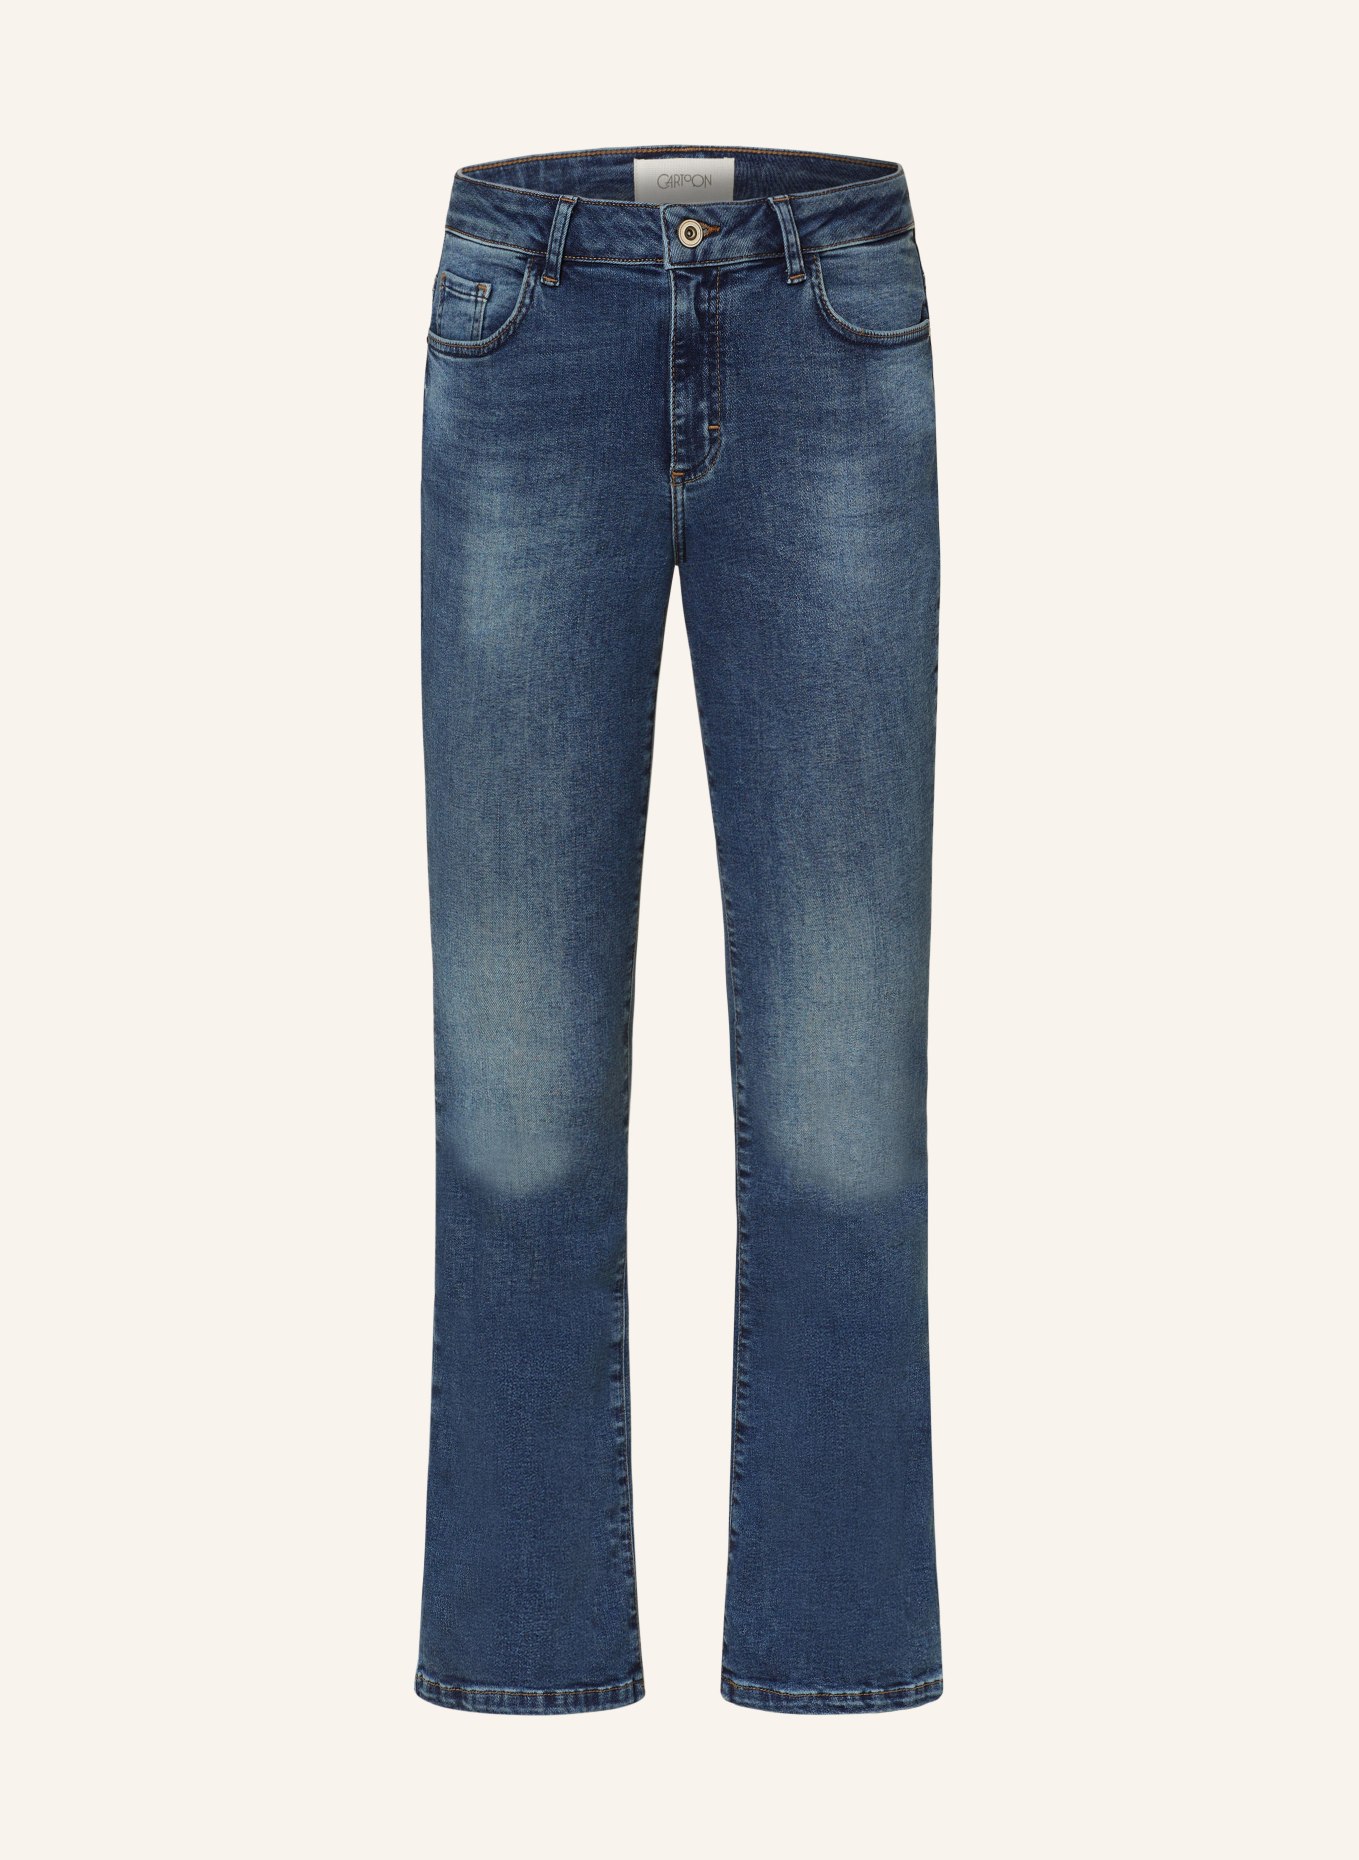 CARTOON Jeans, Farbe: 8620 DARK BLUE DENIM (Bild 1)